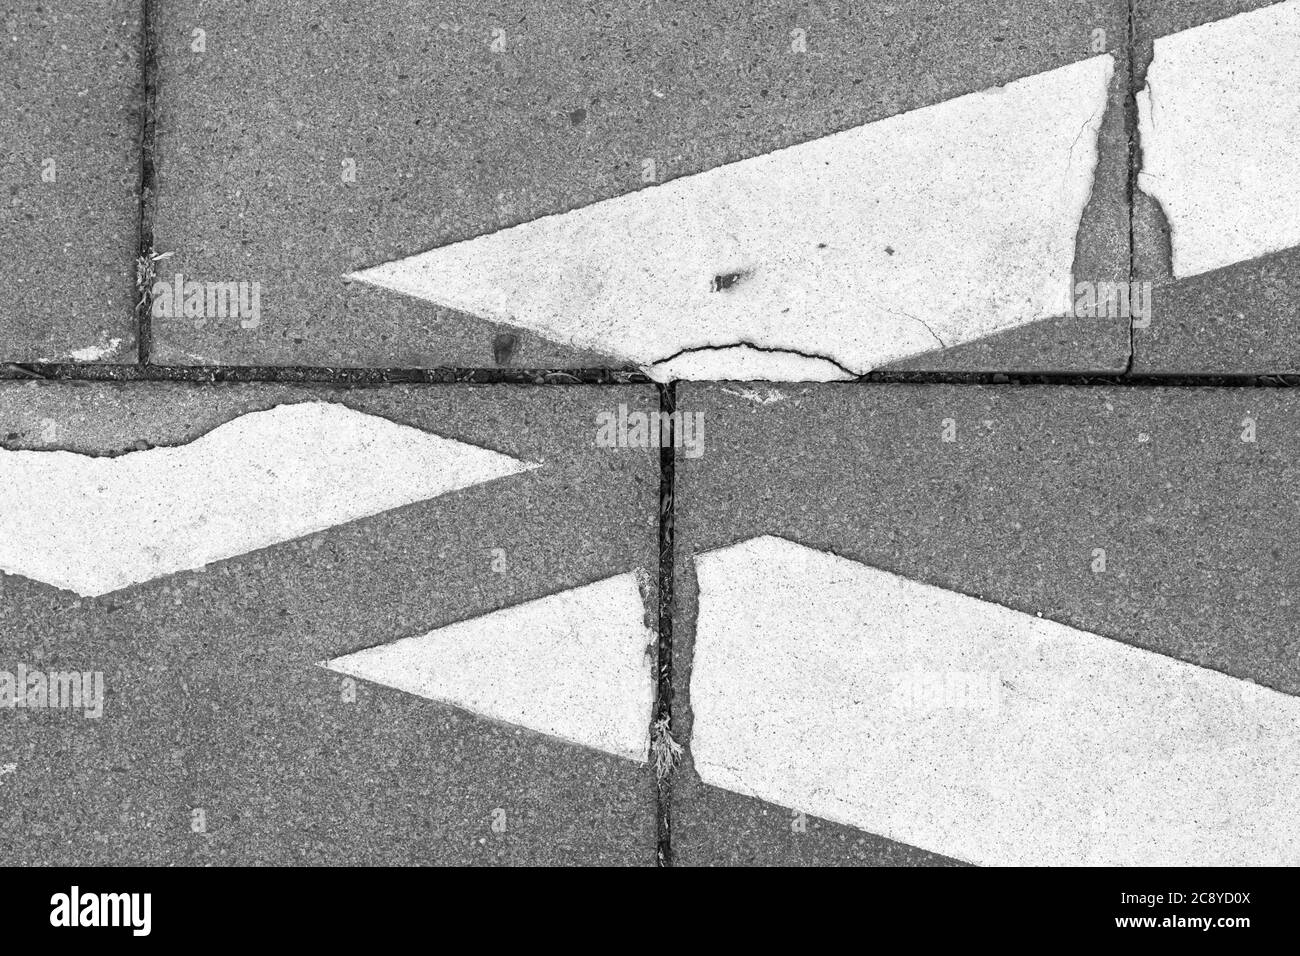 Road marking like a face of a shark, Germany Stock Photo